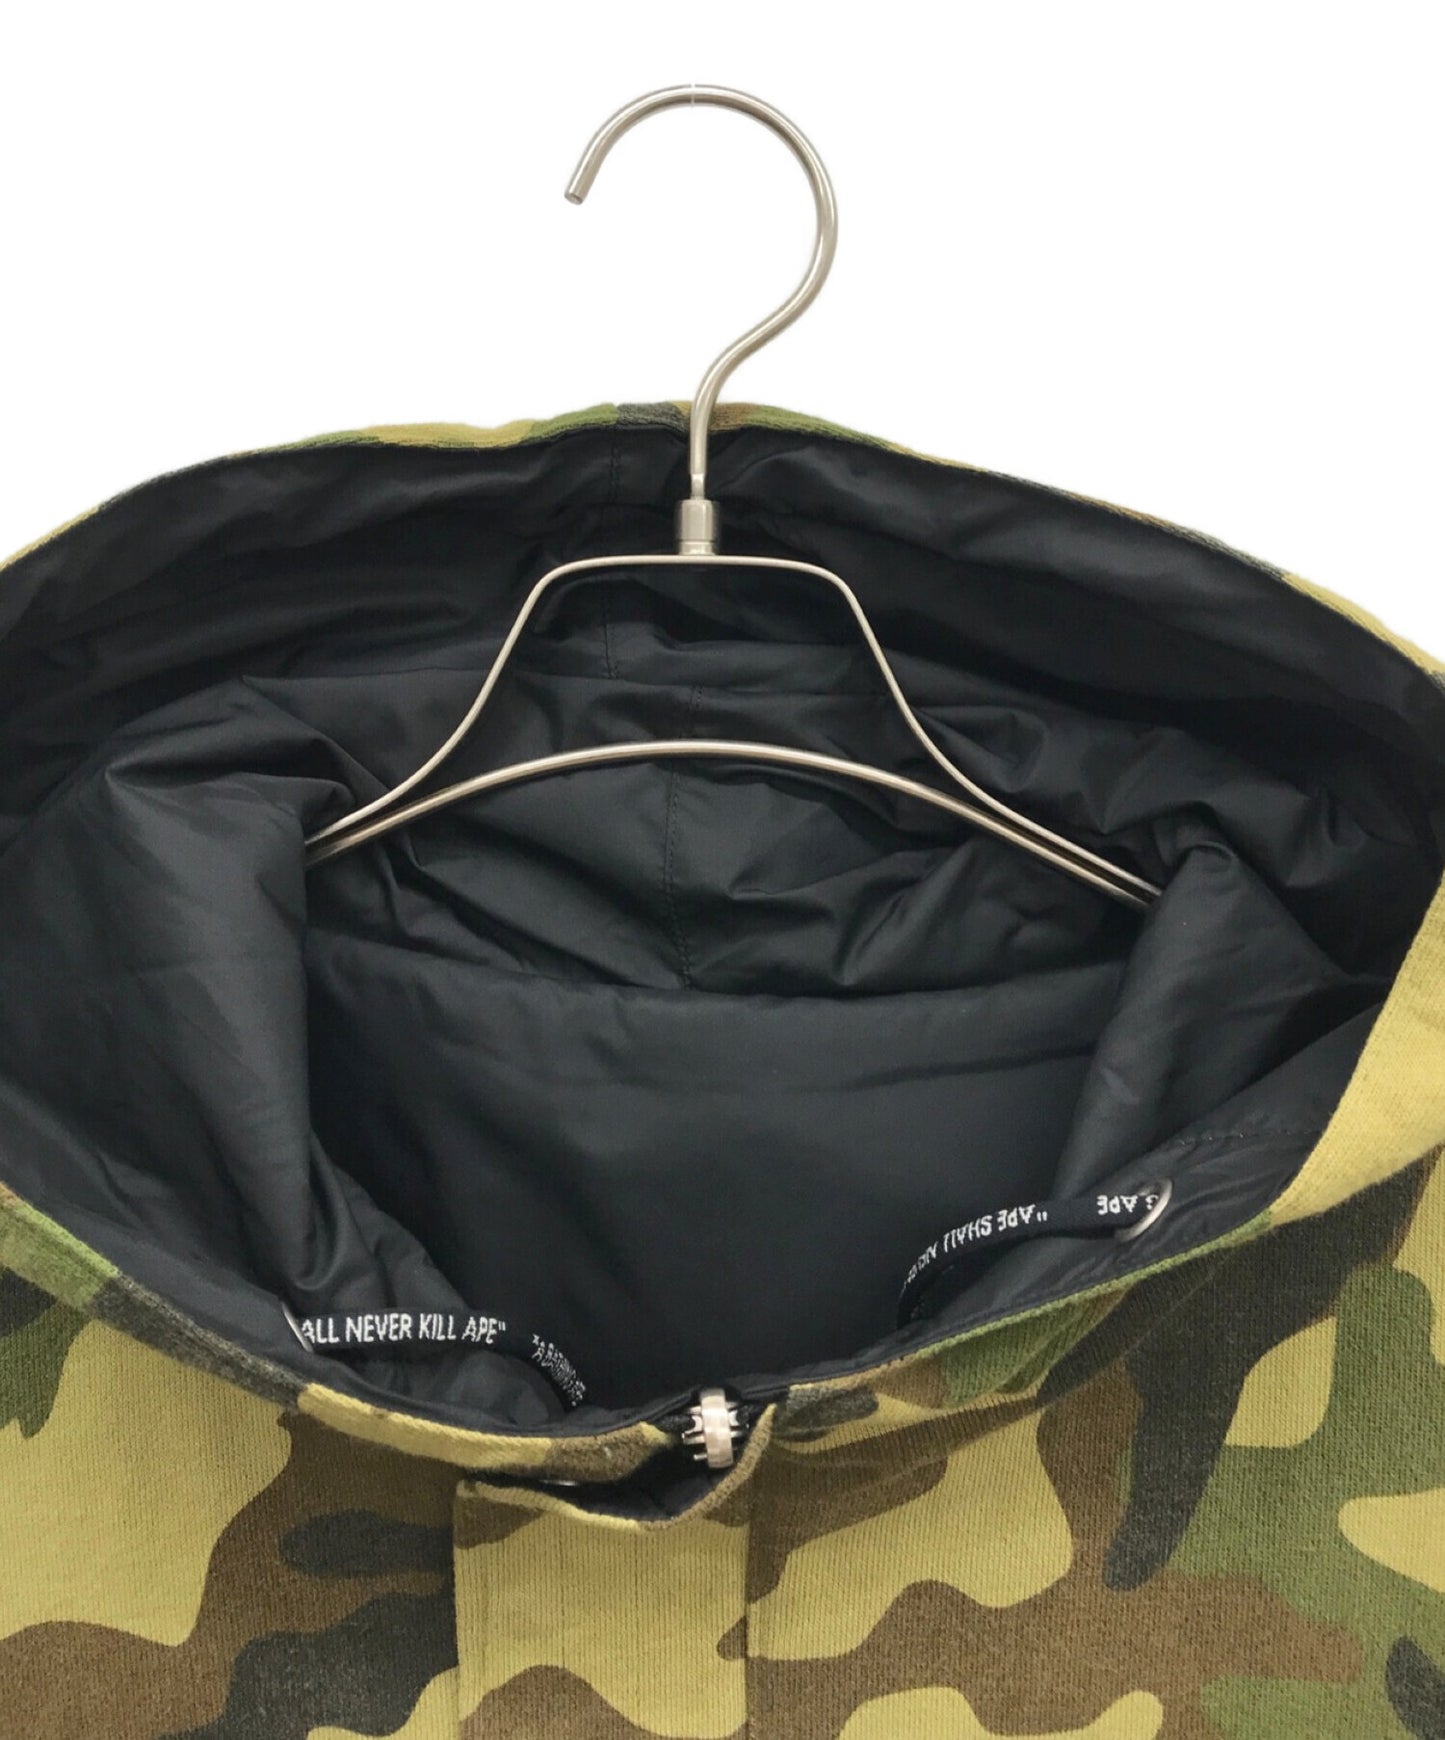 [Pre-owned] A BATHING APE Reversible nylon jacket